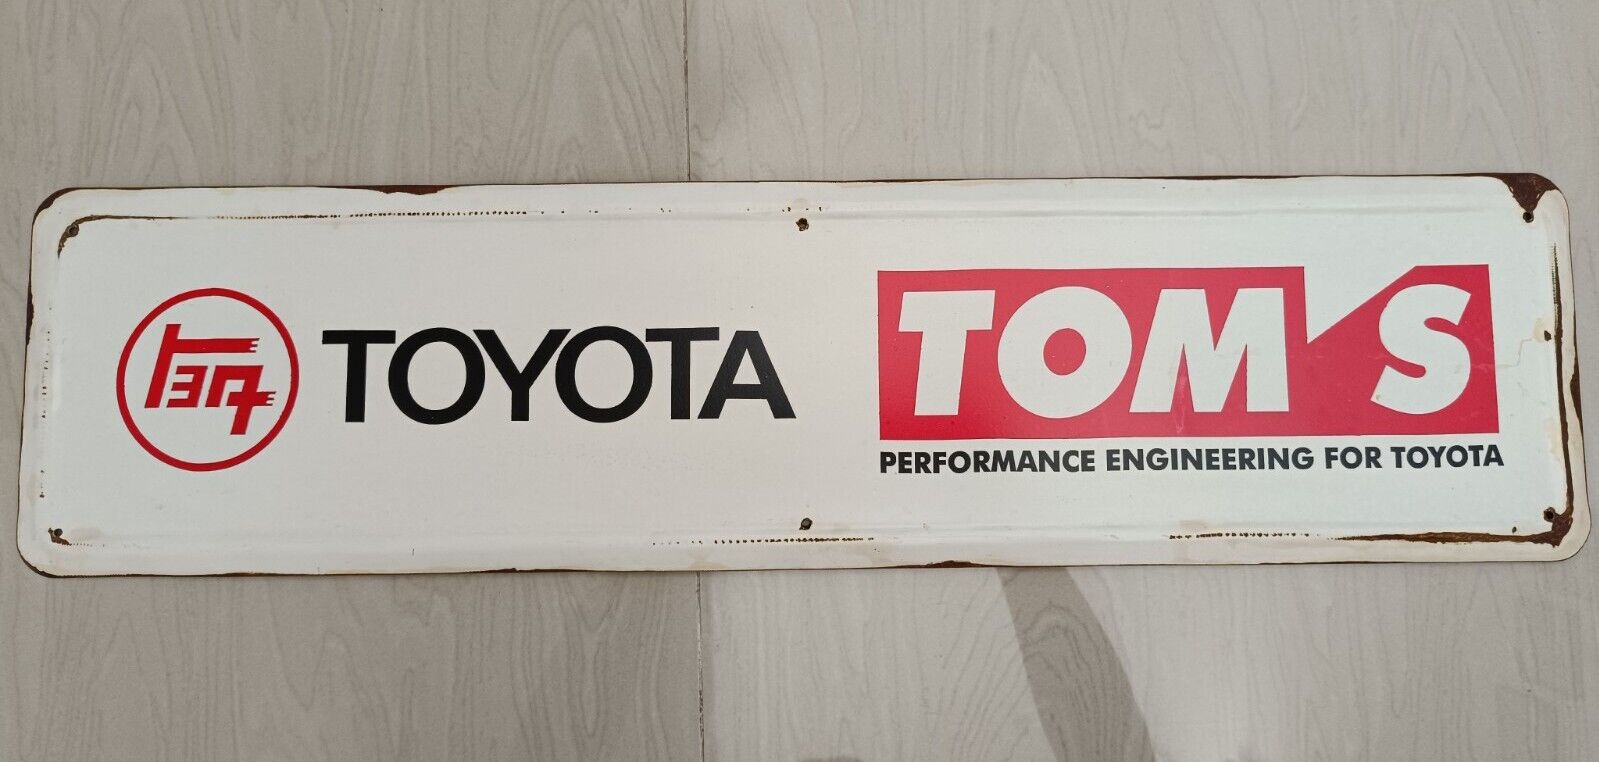 VINTAGE TOYOTA TOM'S PORCELAIN GAS AUTOMOBILE SERVICE WORKSHOP SIGN 70x18 Cm